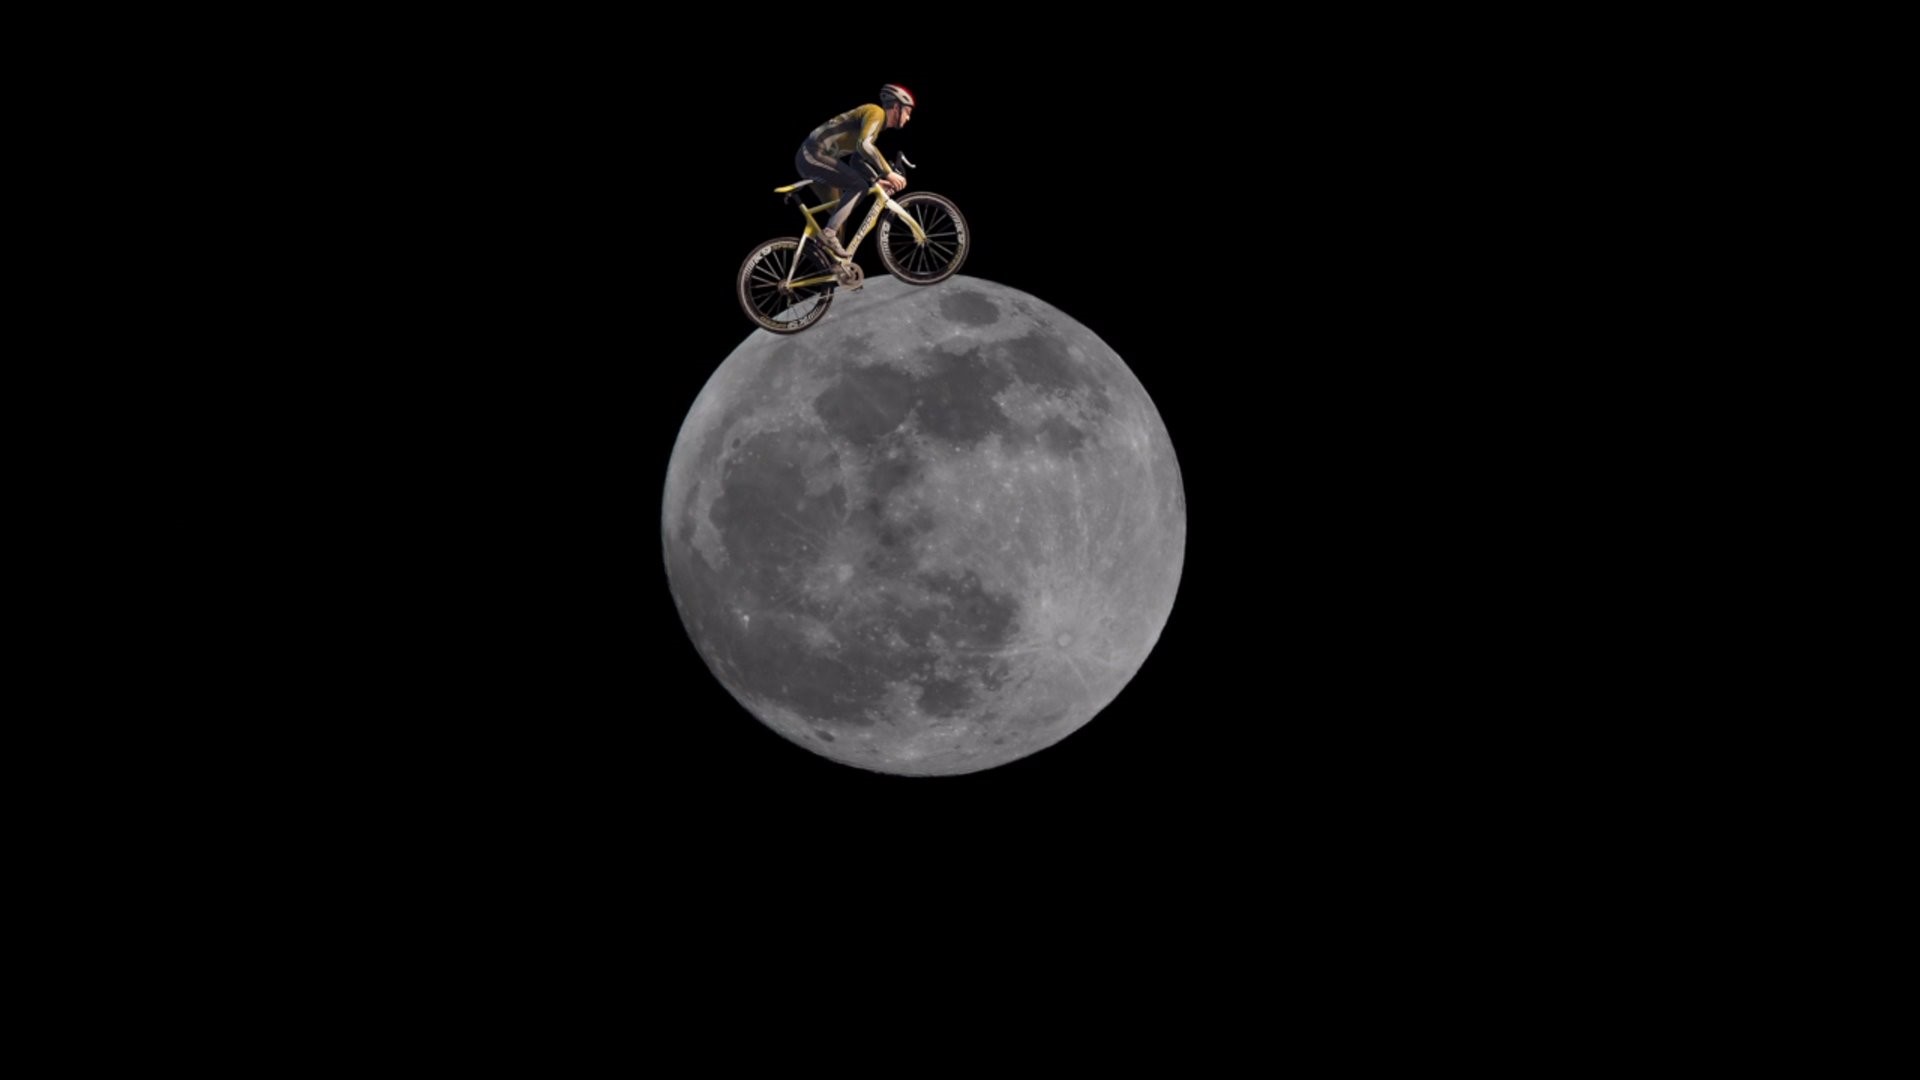 Wham Cam: How Long Will It Take Joe to Bike to the Moon?